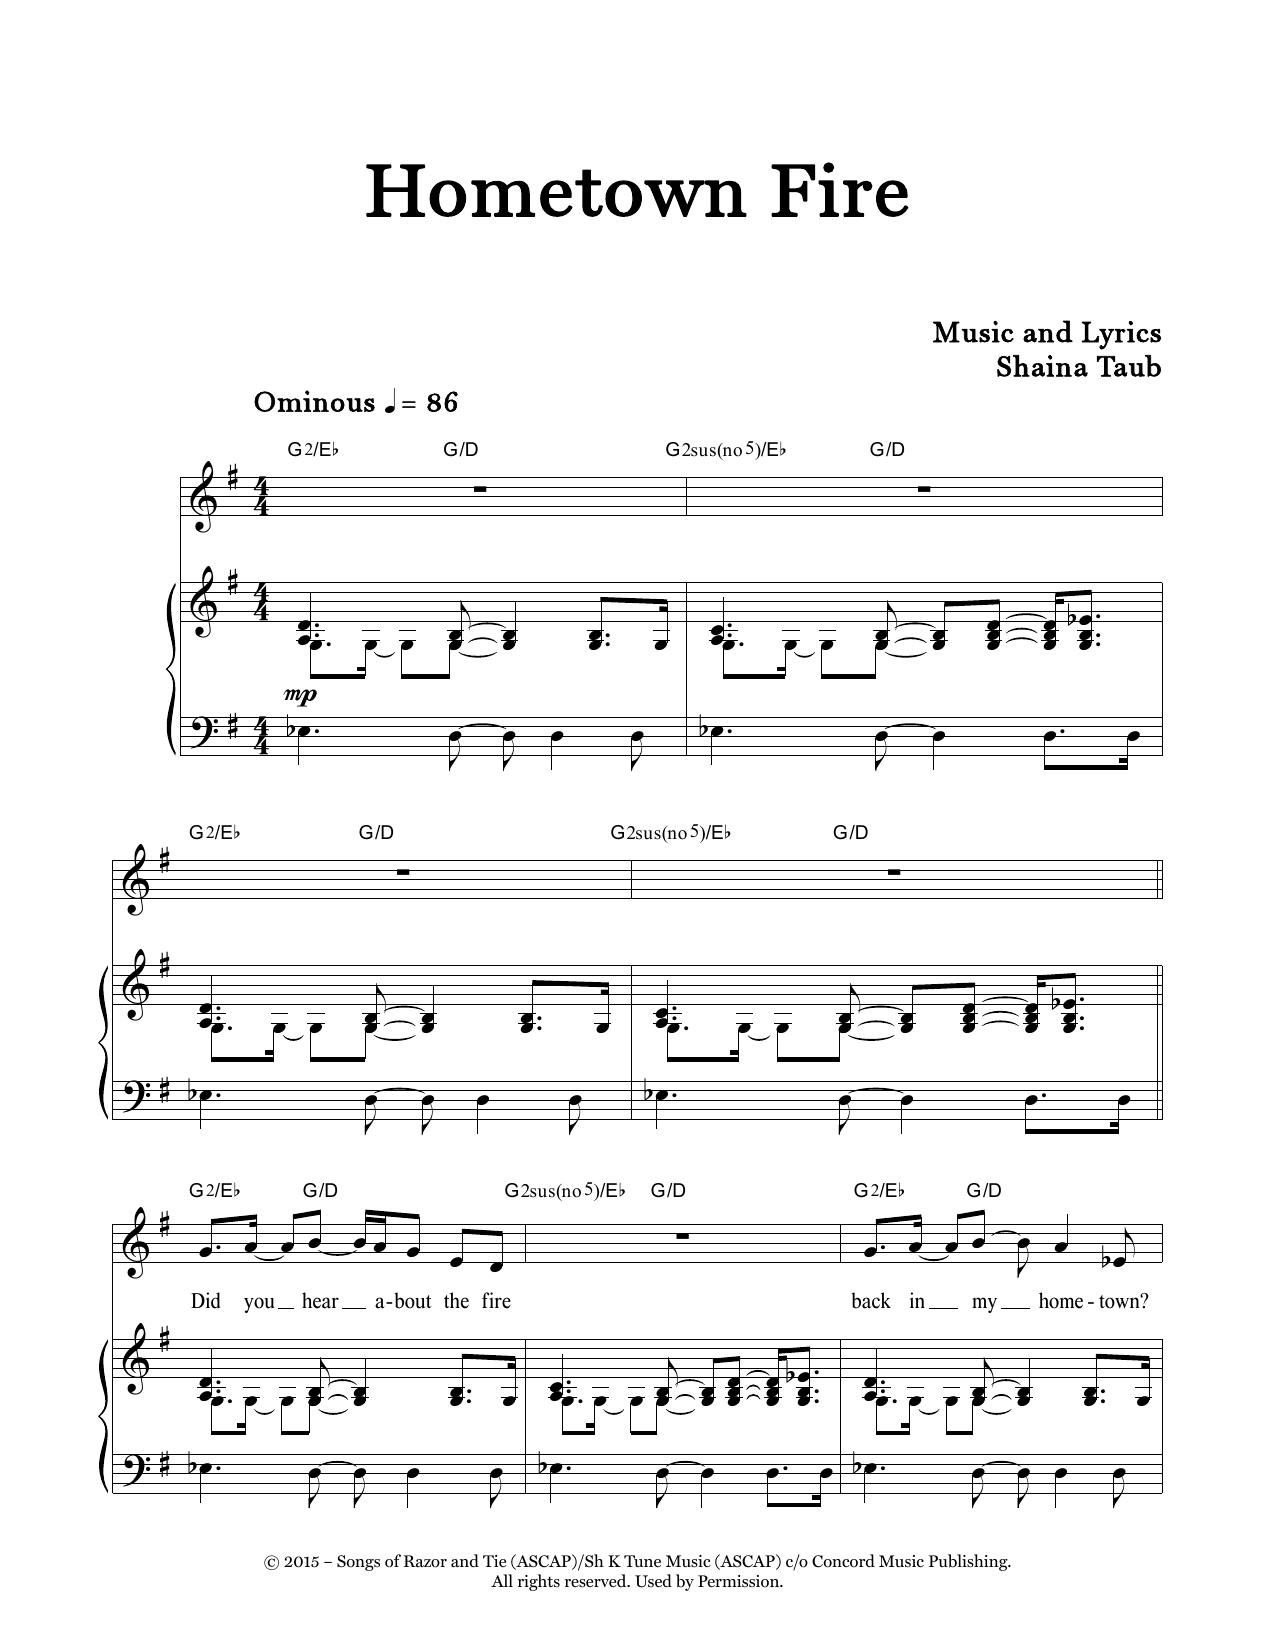 Download Shaina Taub Hometown Fire Sheet Music